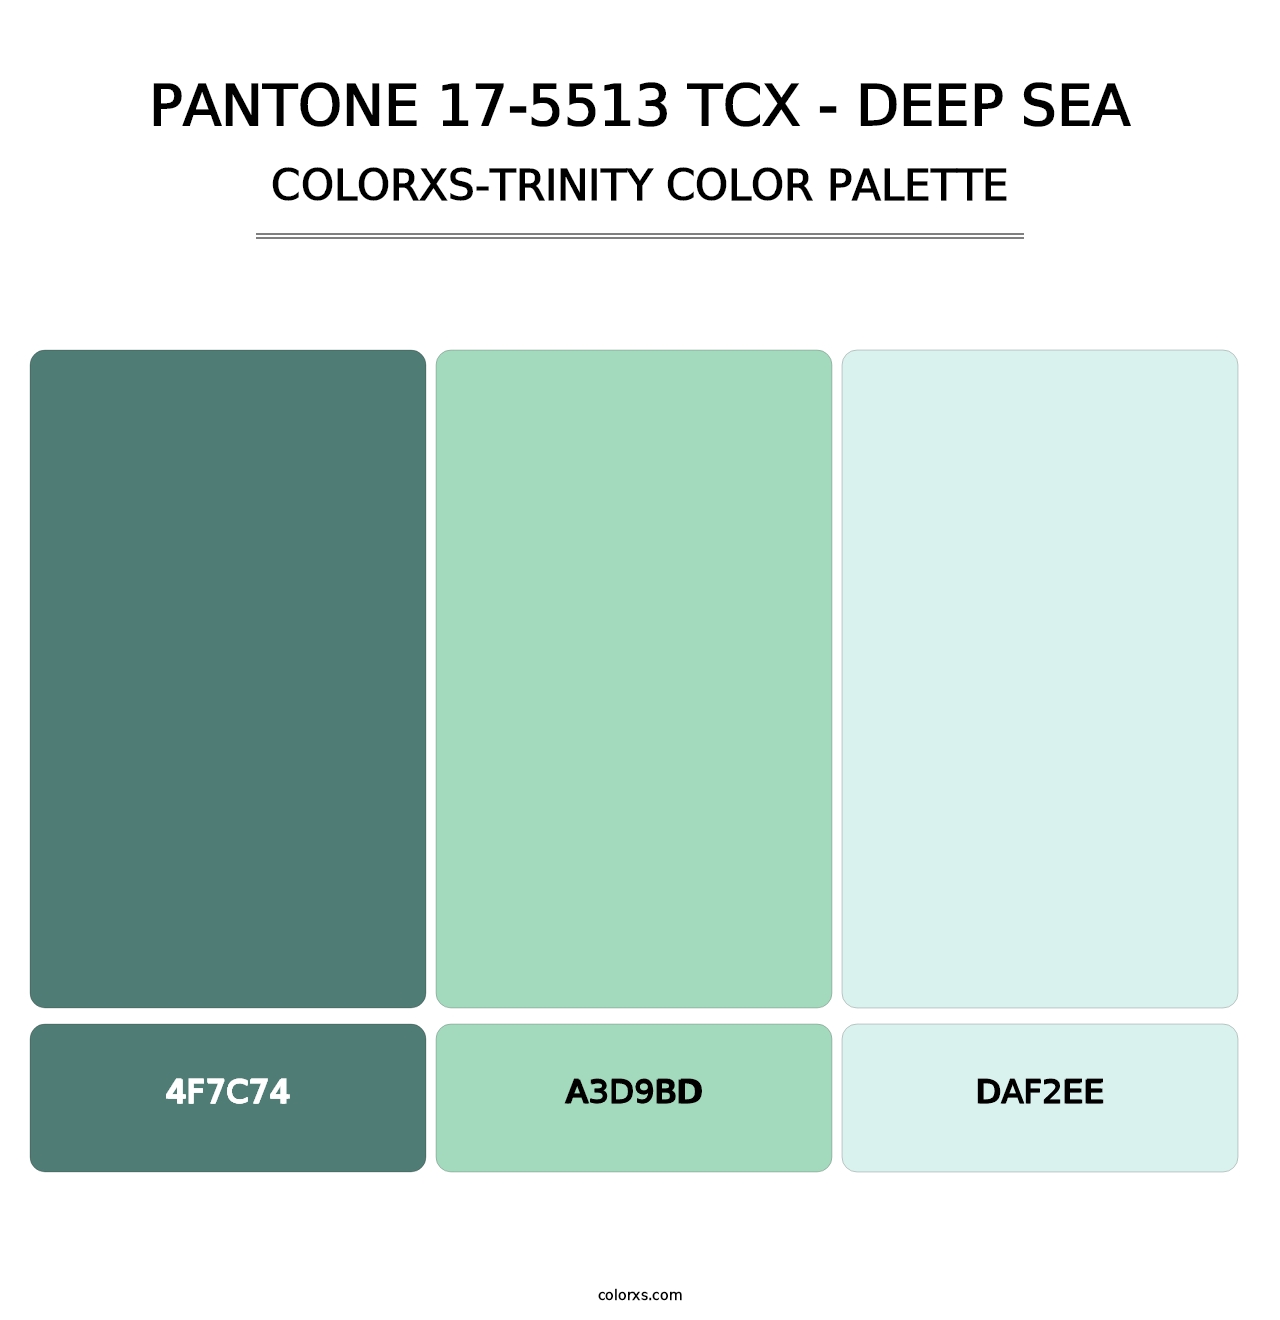 PANTONE 17-5513 TCX - Deep Sea - Colorxs Trinity Palette